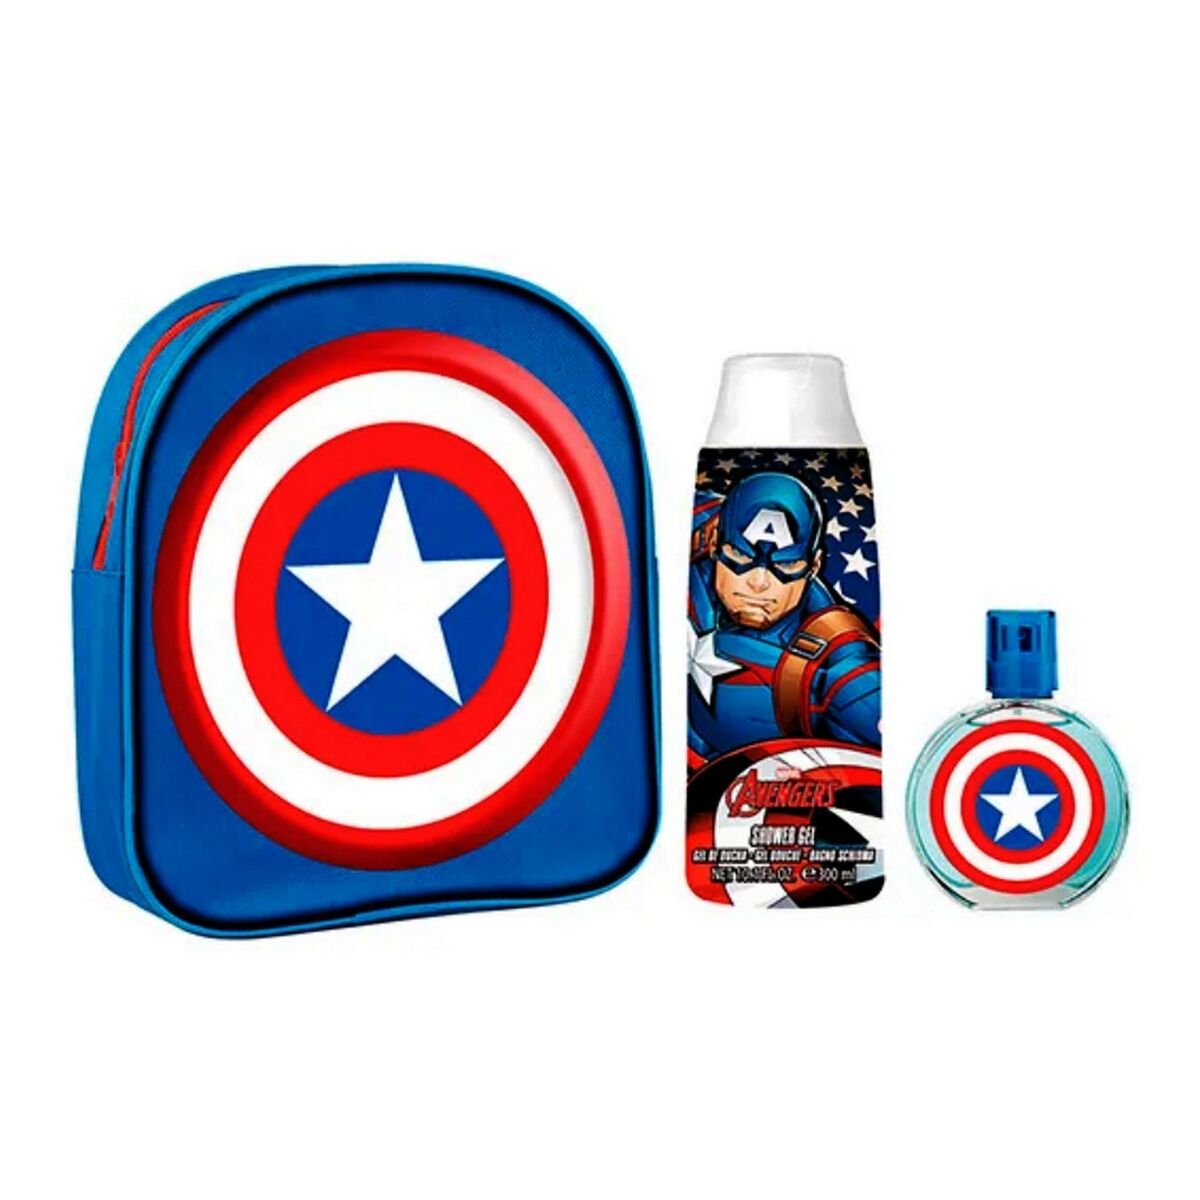 Barns parfymuppsättning Capitán América edt 2 stycken